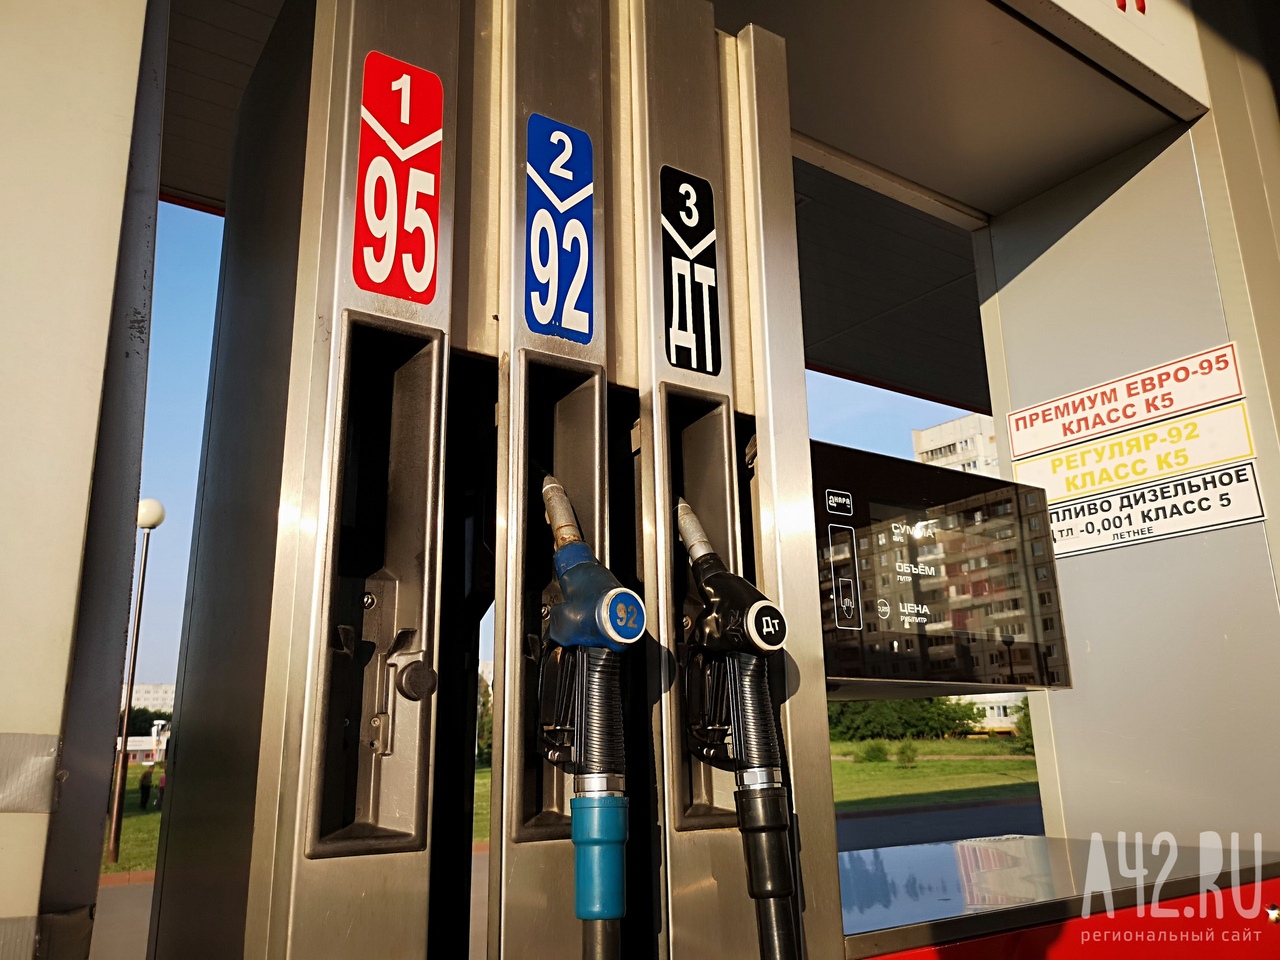 Кузбассовец возмутился ценой 55 рублей за литр бензина: комментарий минпромторга